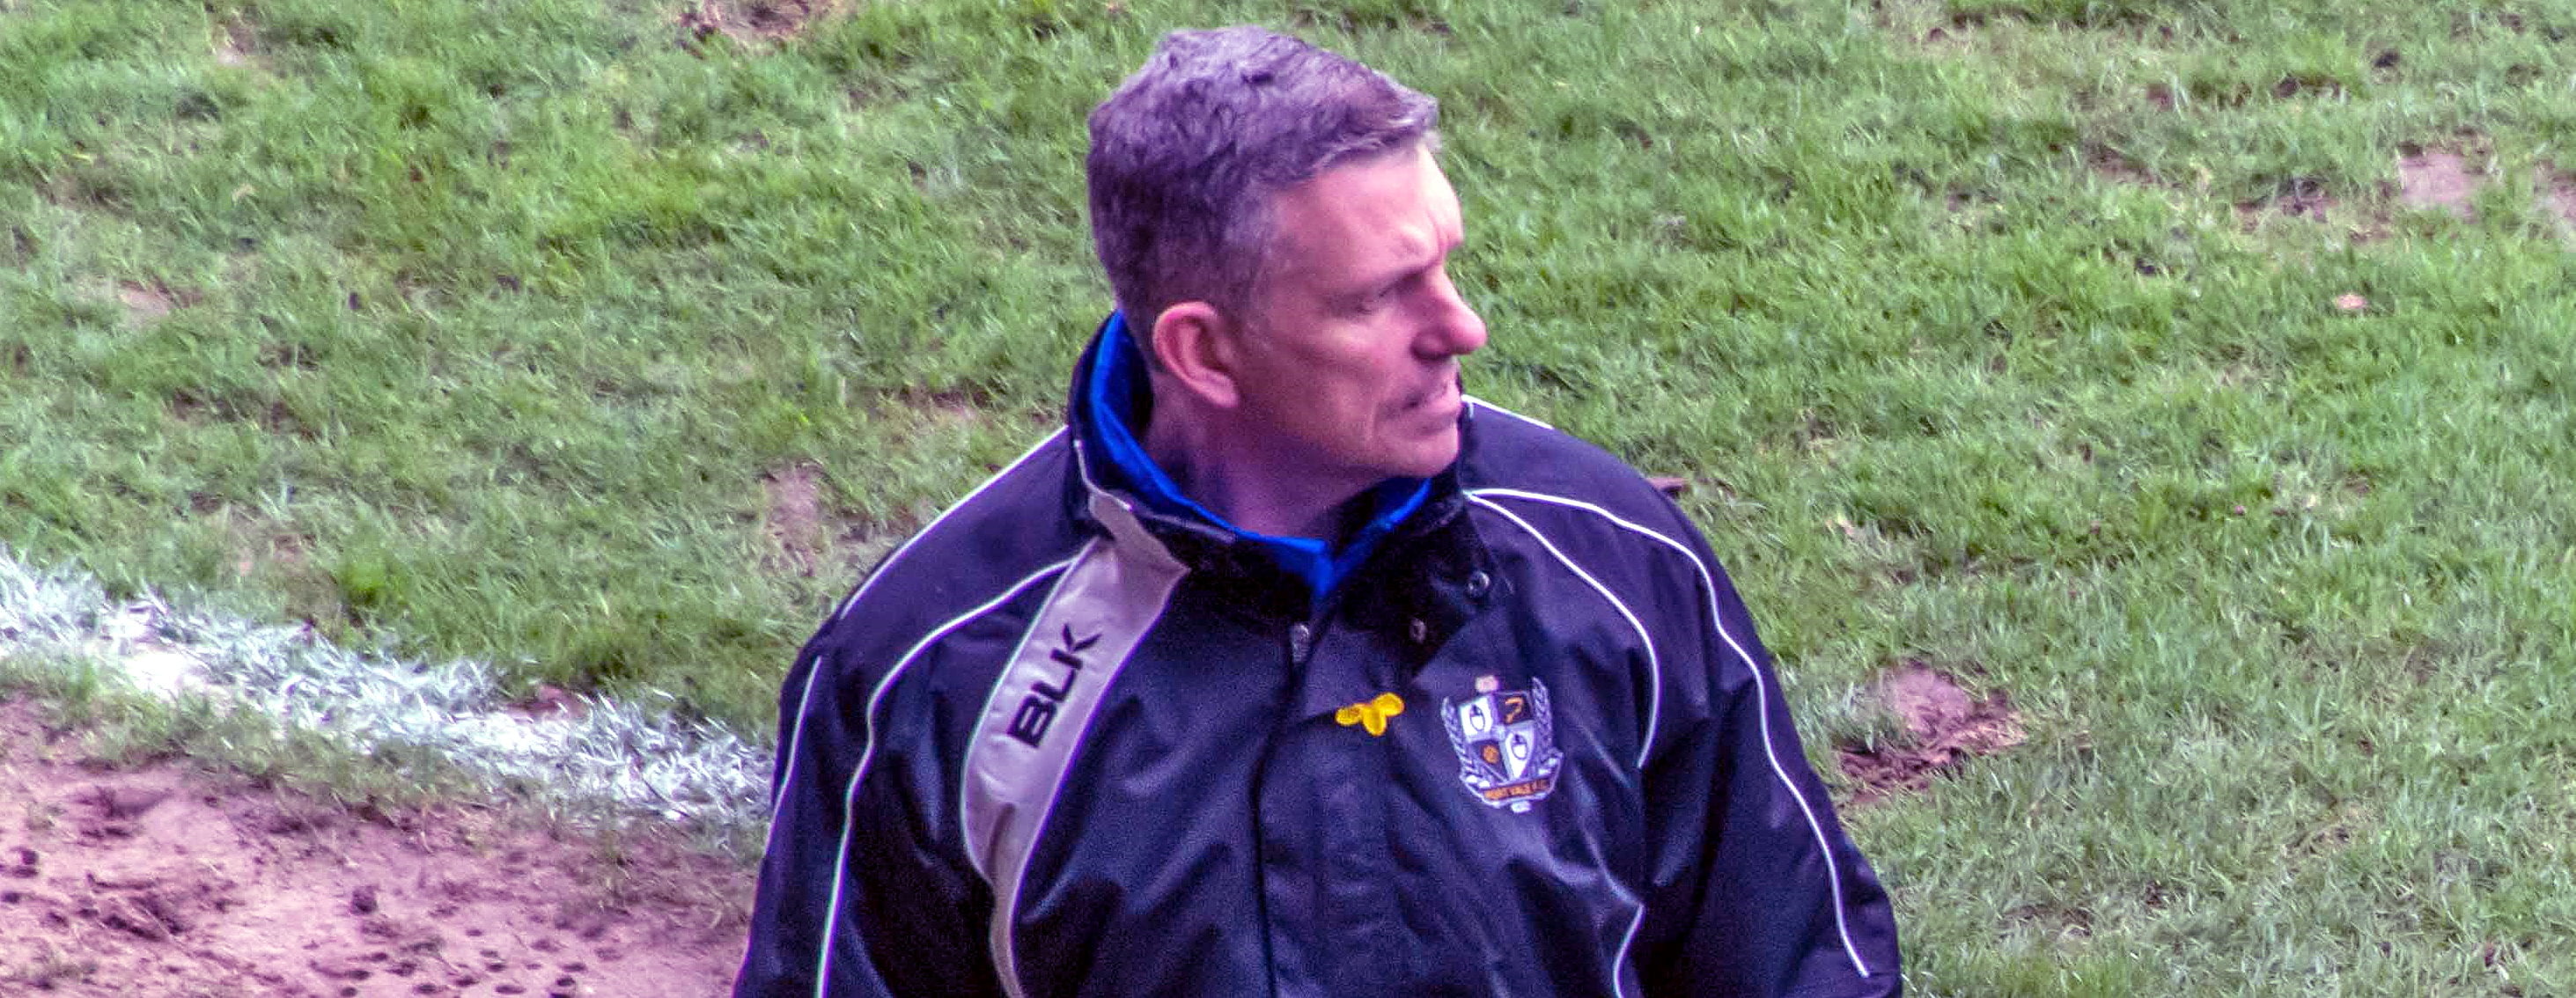 Port Vale FC manager John Askey